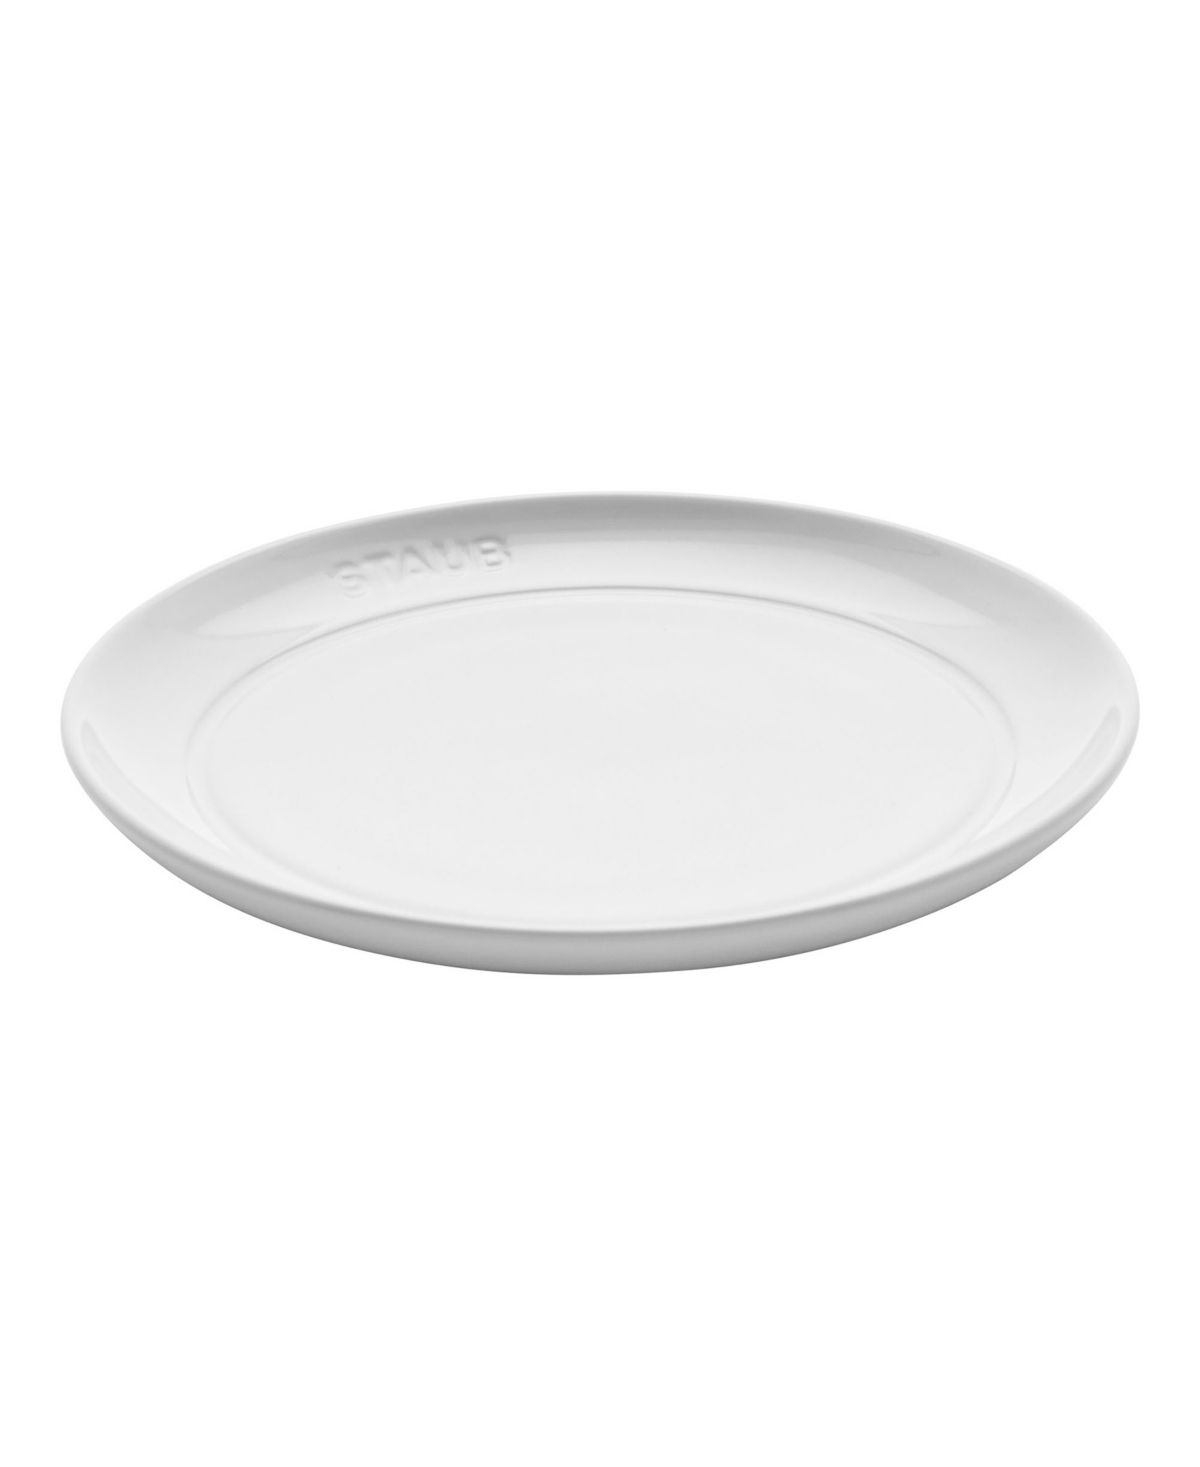 Appetizer Plate 4-Piece Set, 6" - White